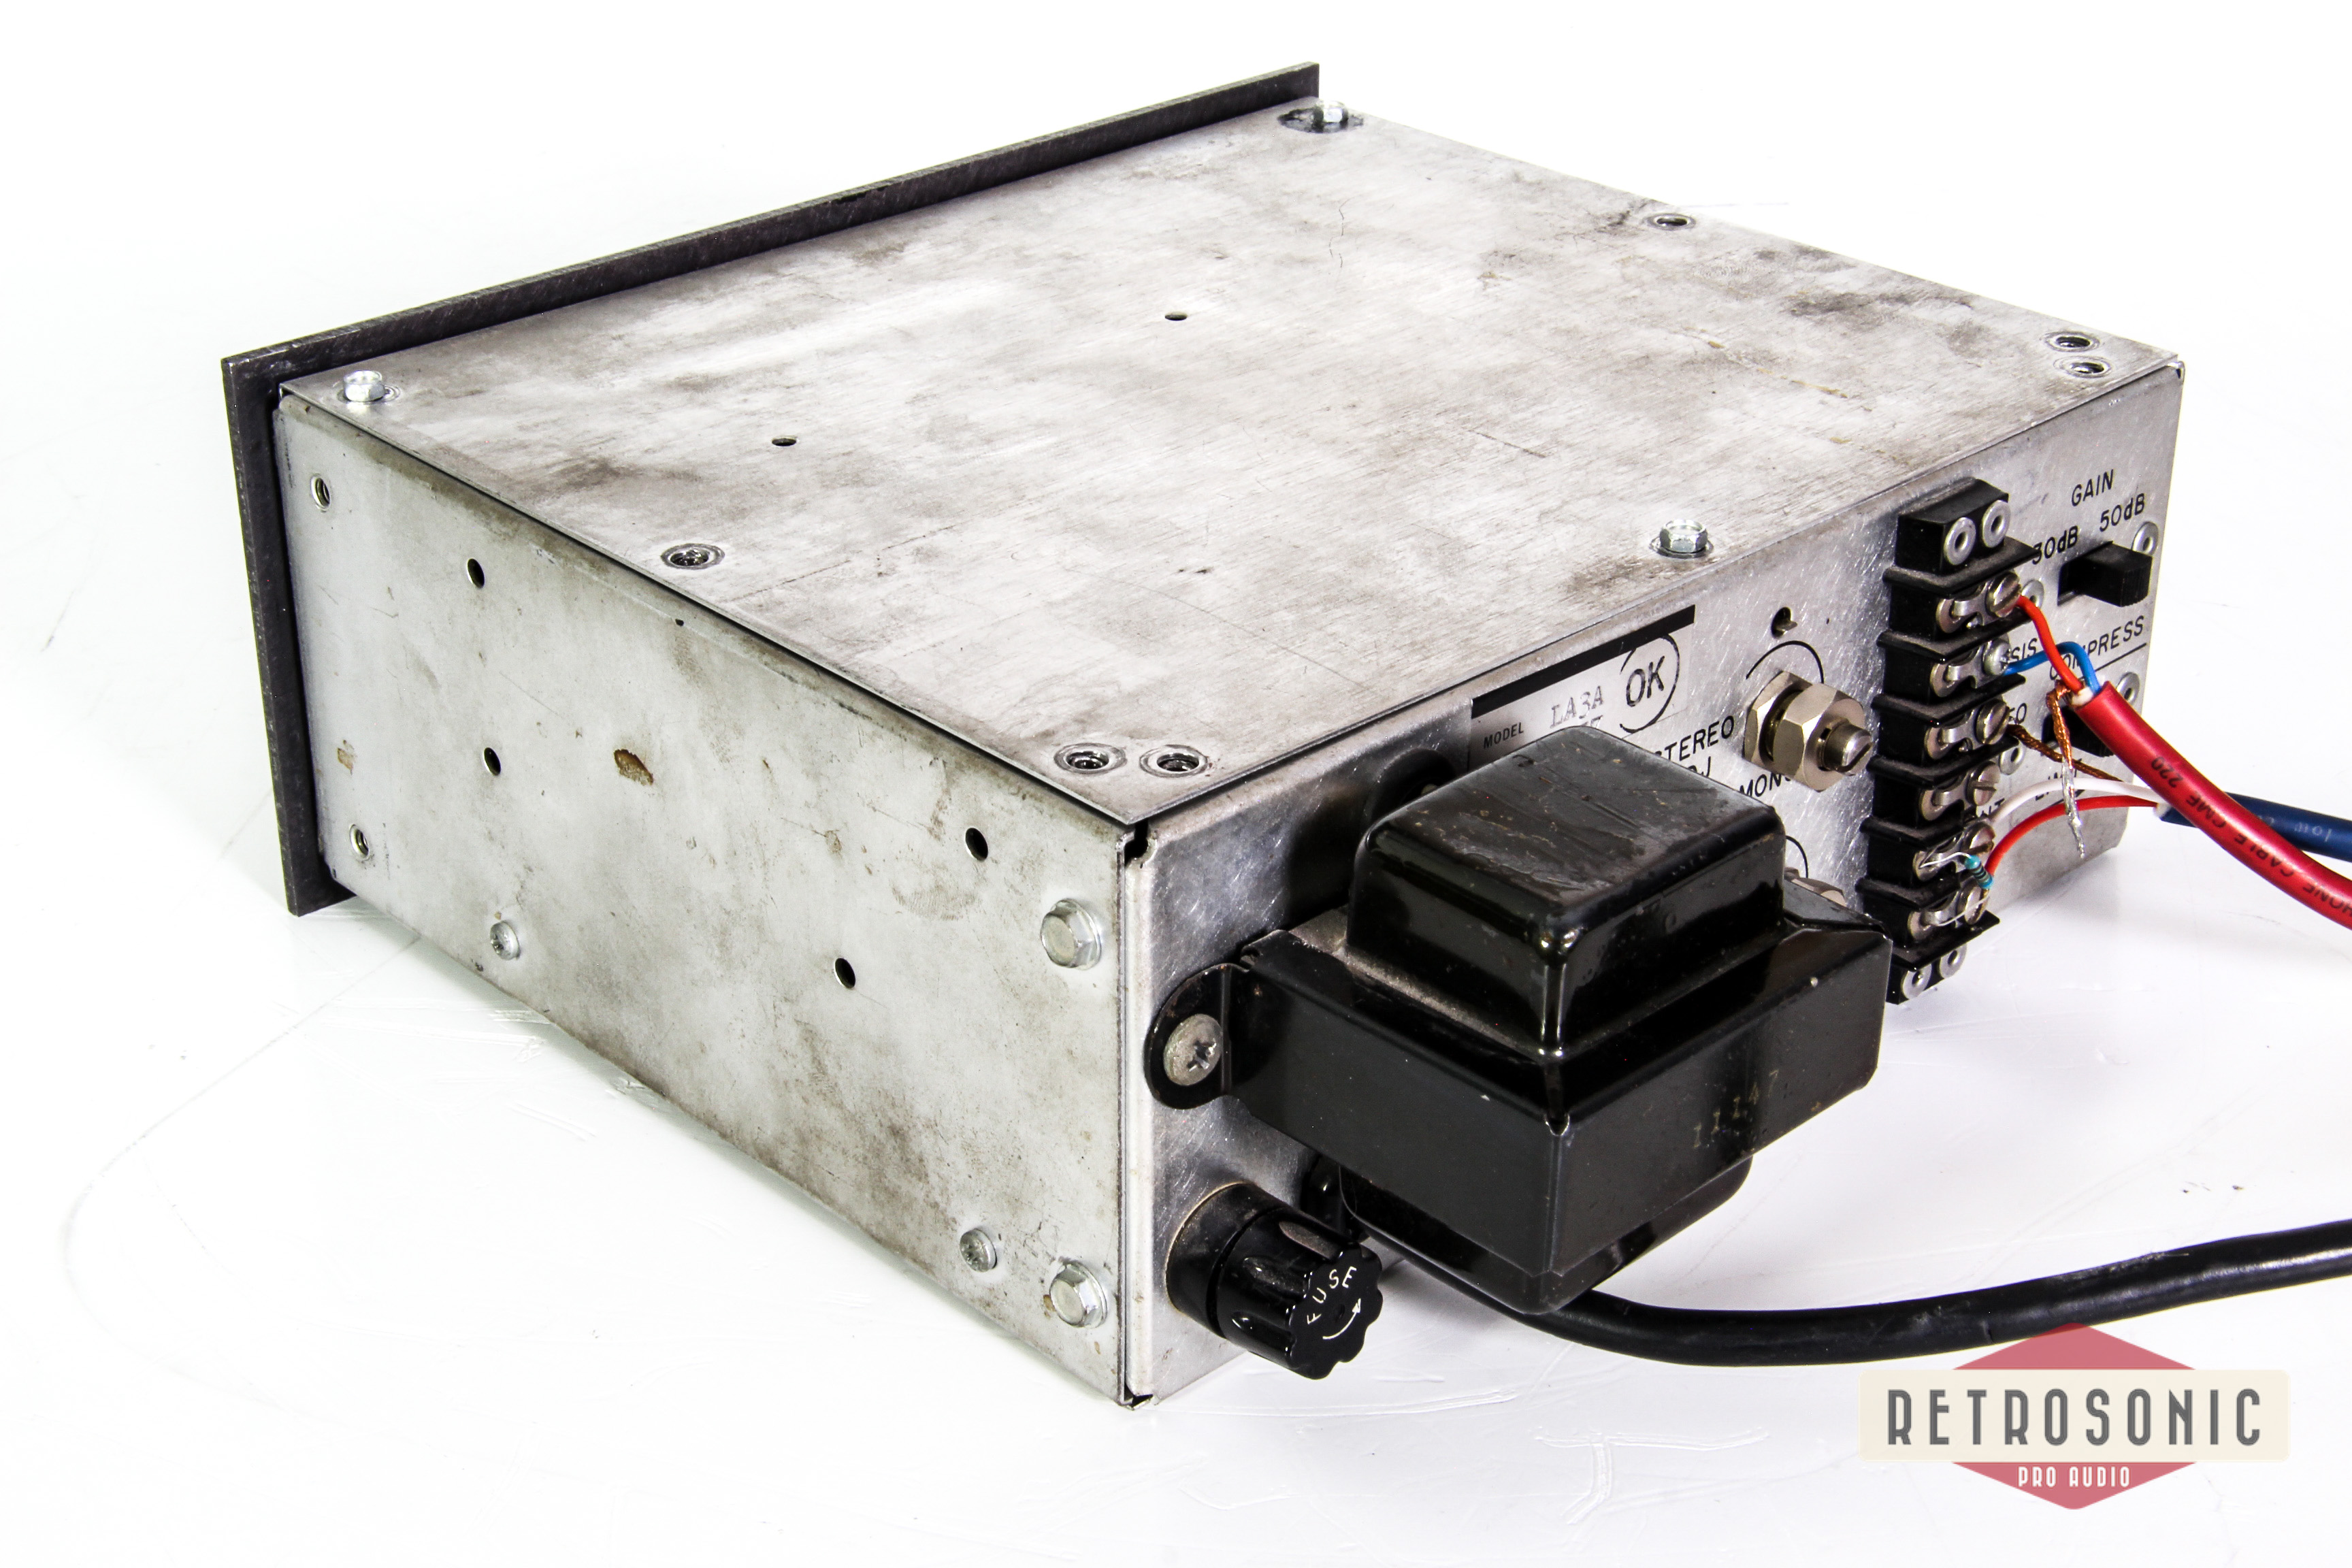 Urei Teletronix LA3A Opto Compressor Vintage Single Unit